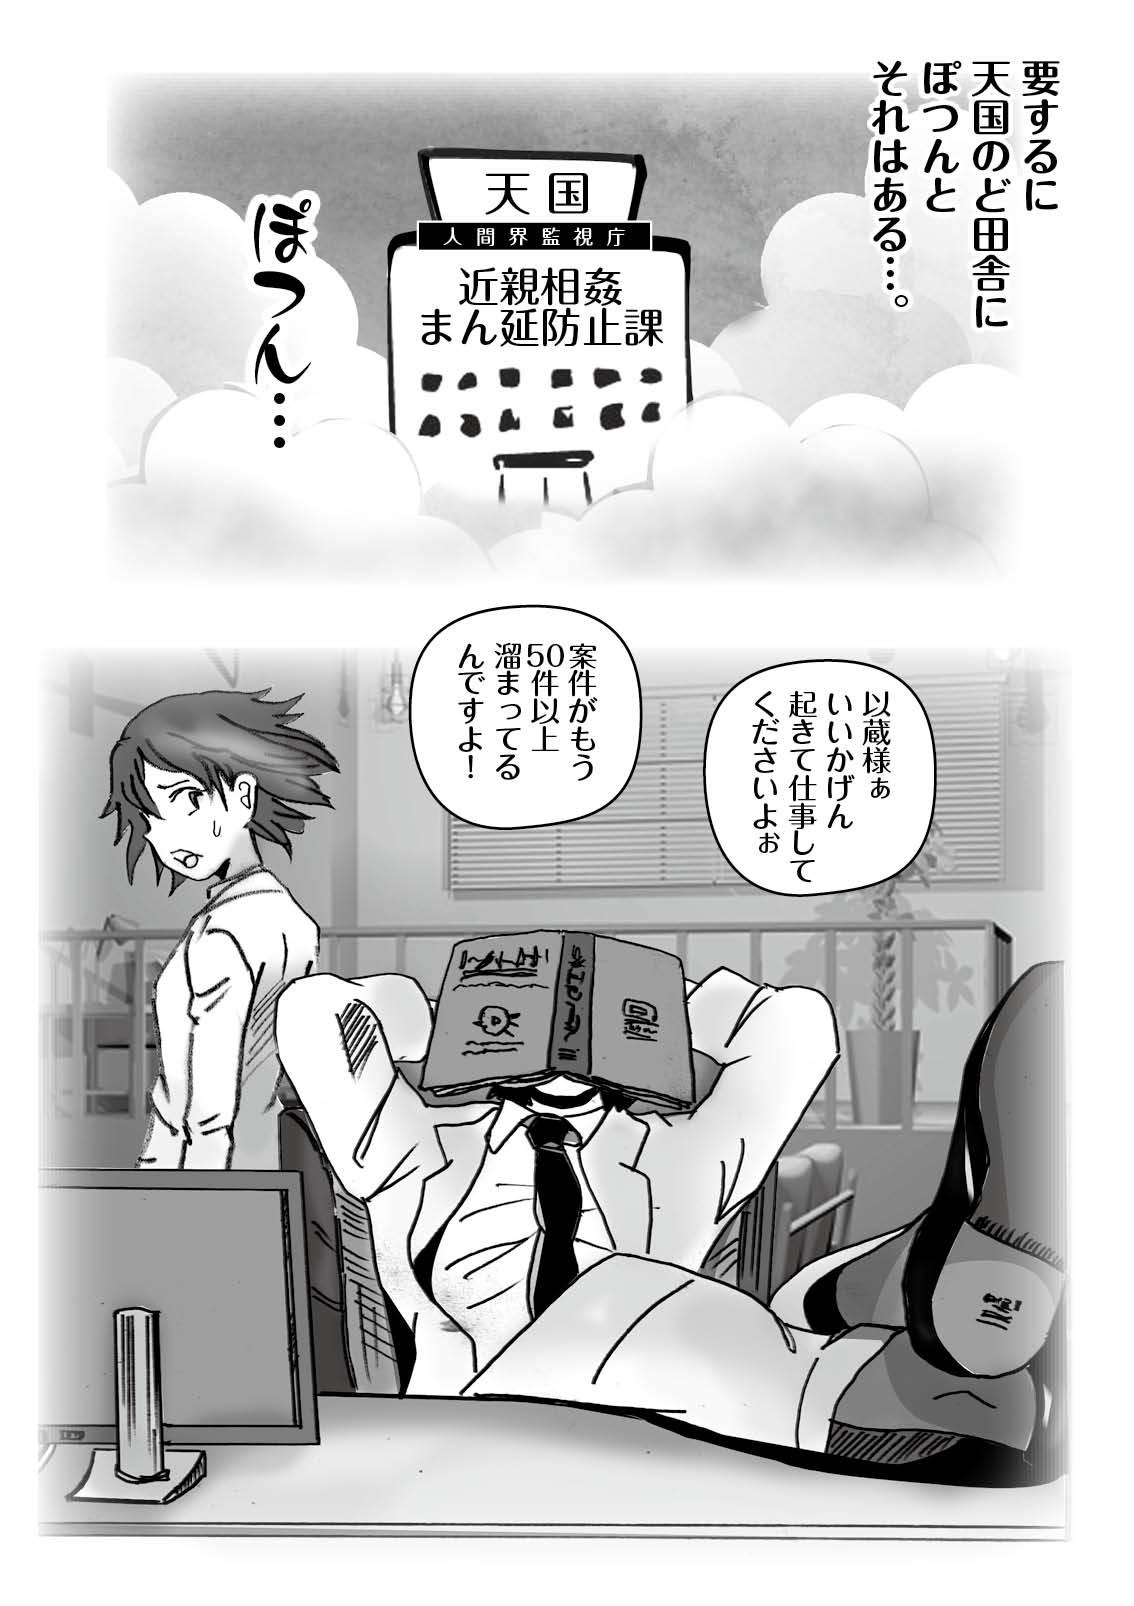 Butts Kochira tengoku! Konshinsōkan man'en bōshi-ka! - Original Olderwoman - Page 3